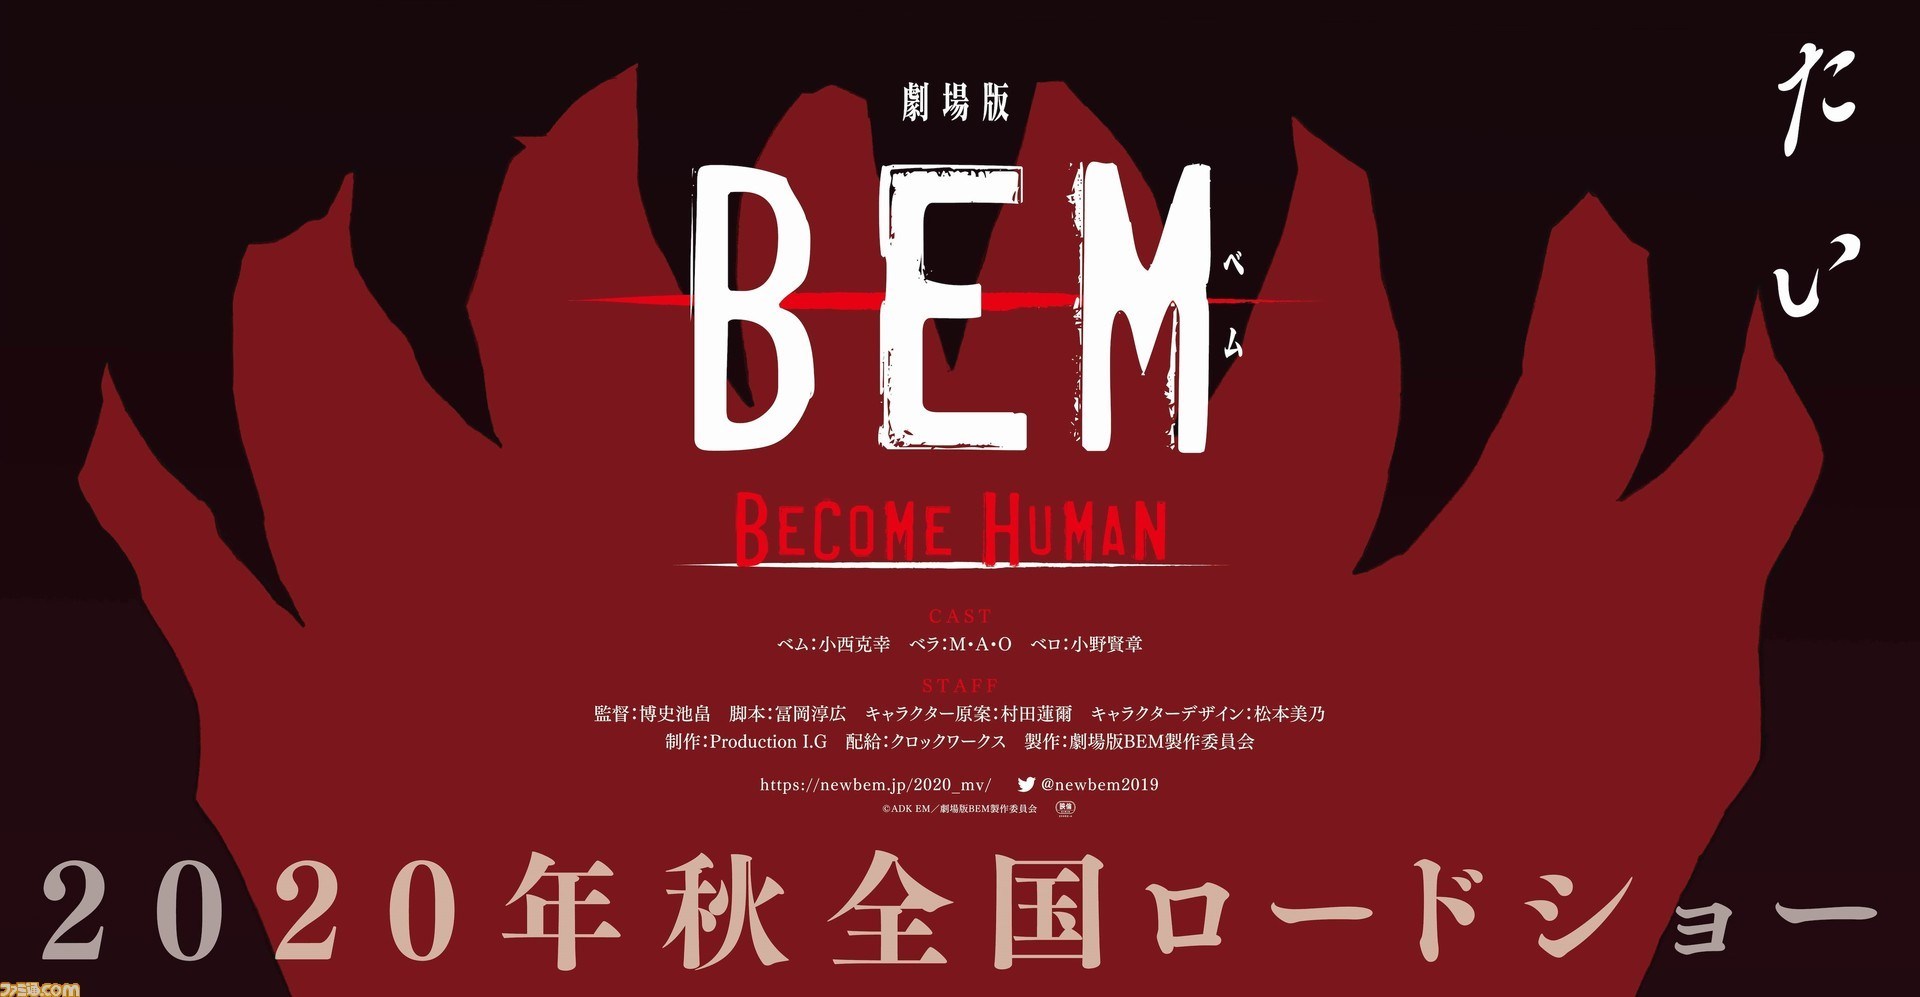 bem movie become human game